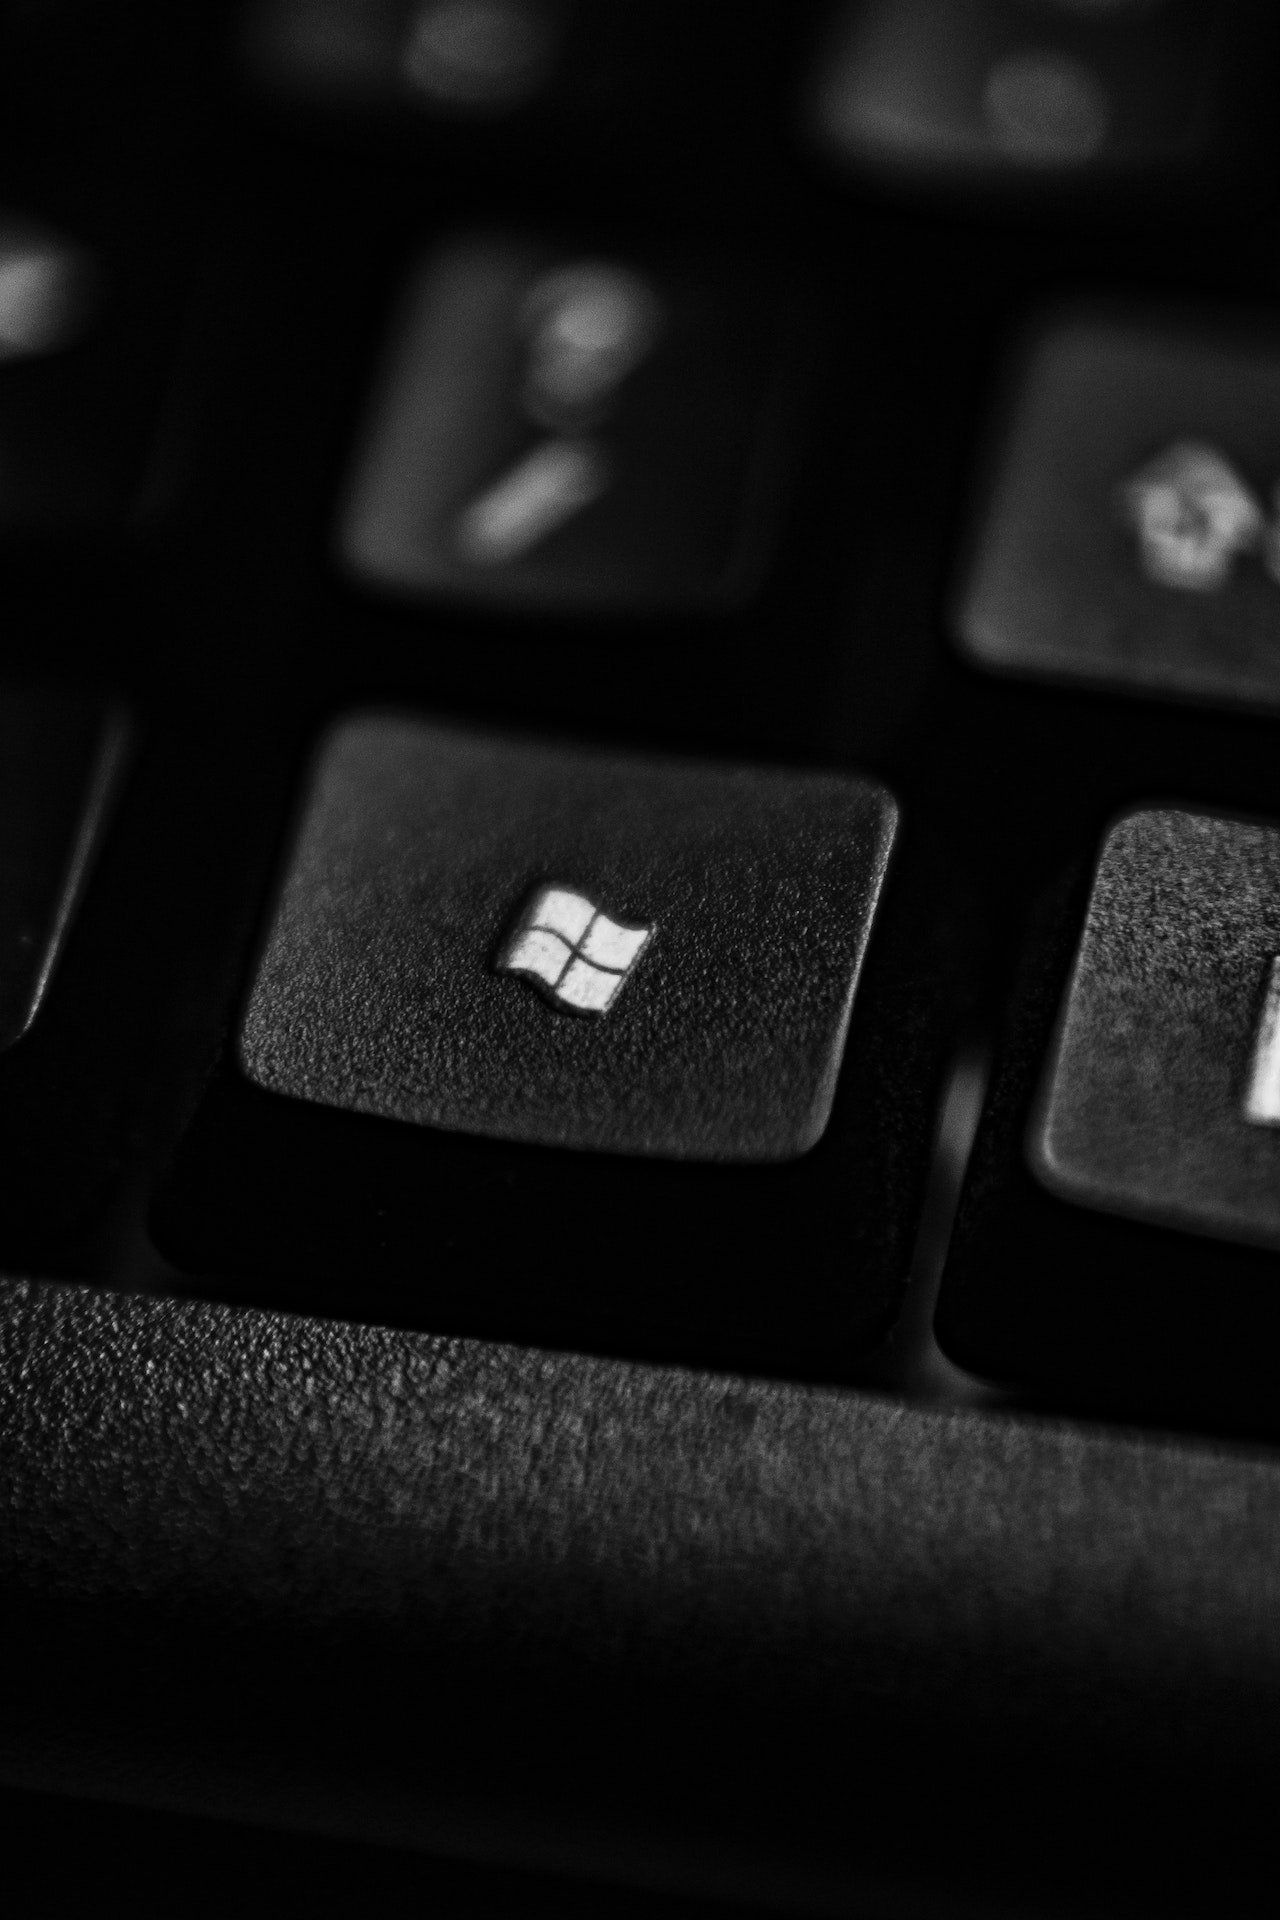 the Microsoft logo on a computer keyboard